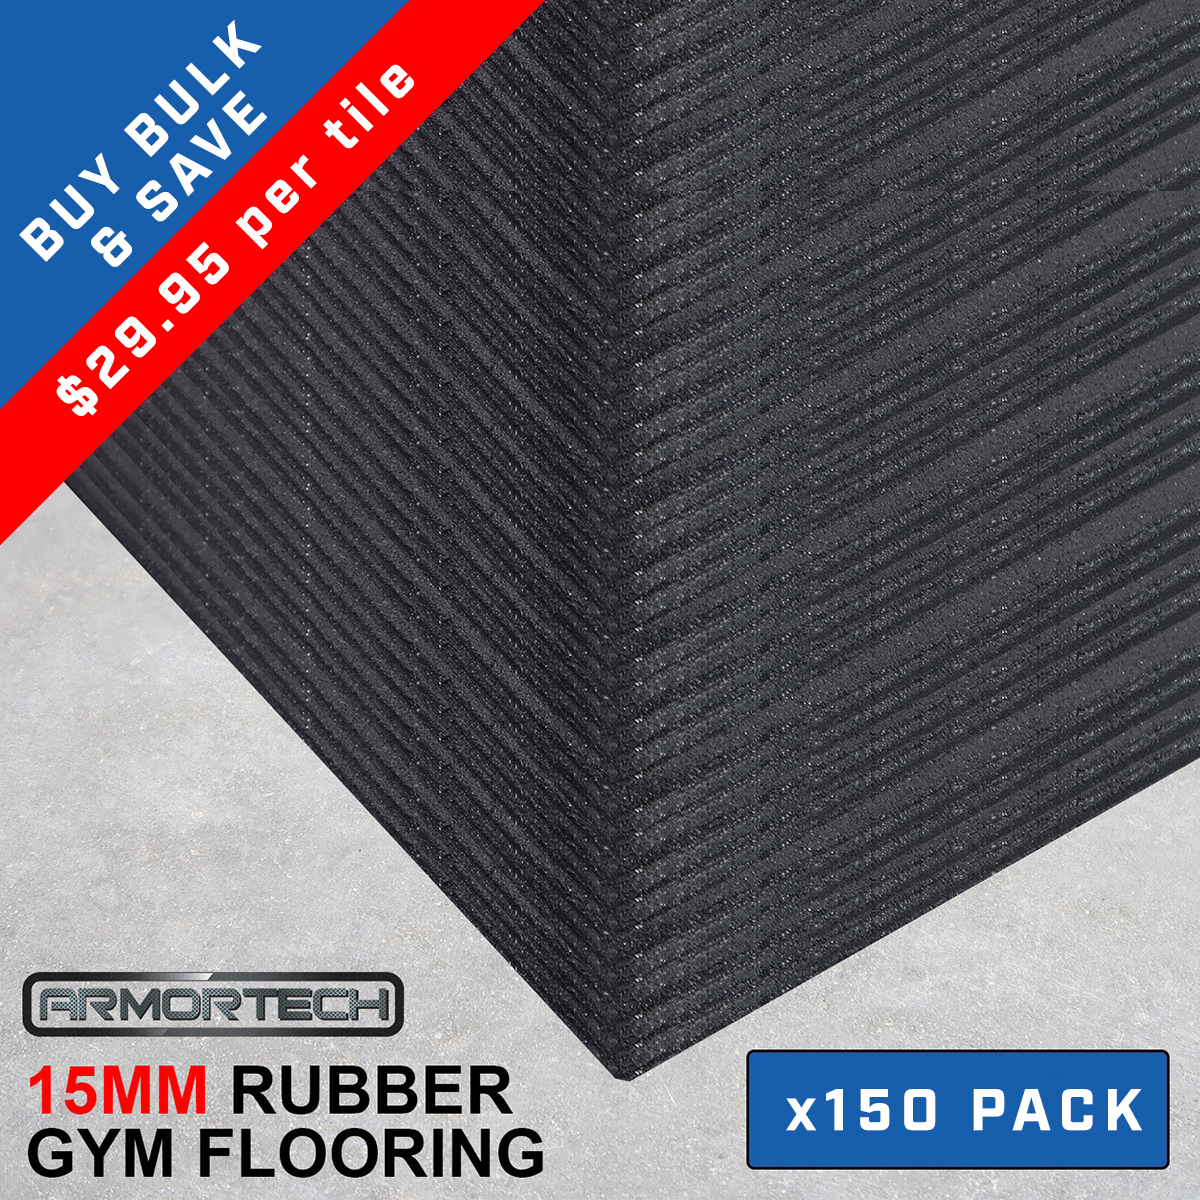 Armortech 150 pack Black Rubber Gym Flooring Mats